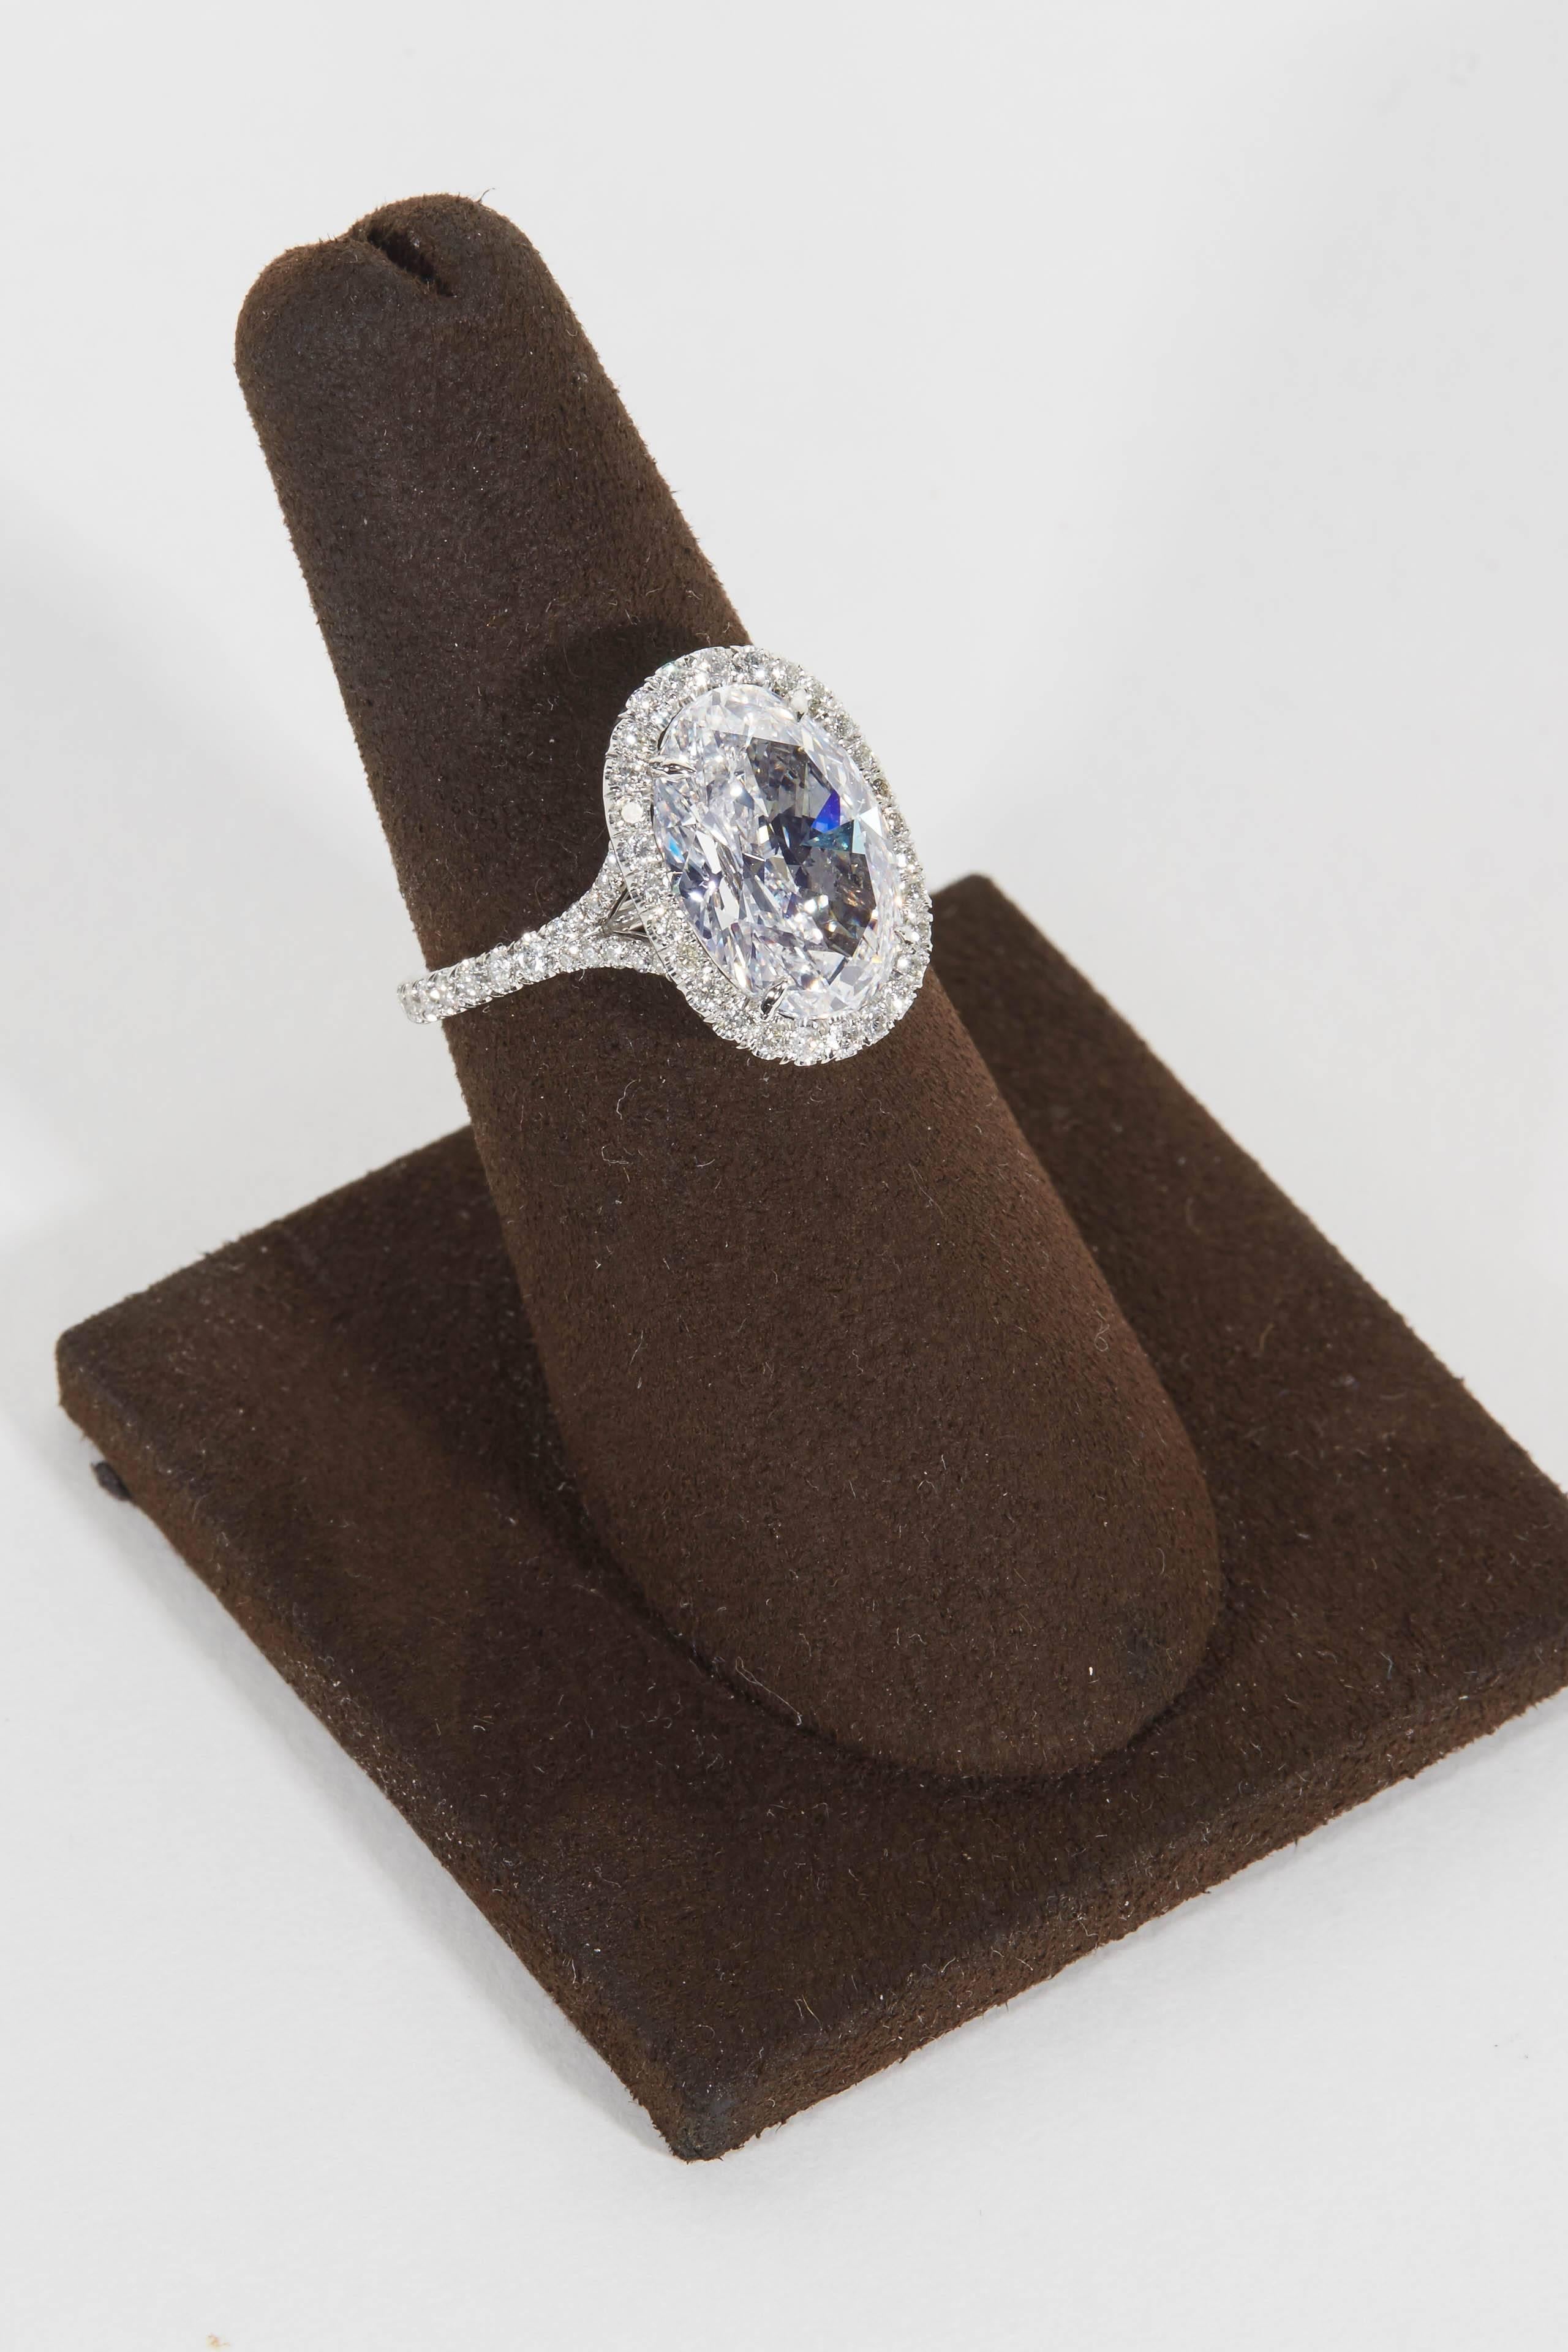 oval diamond engagement rings